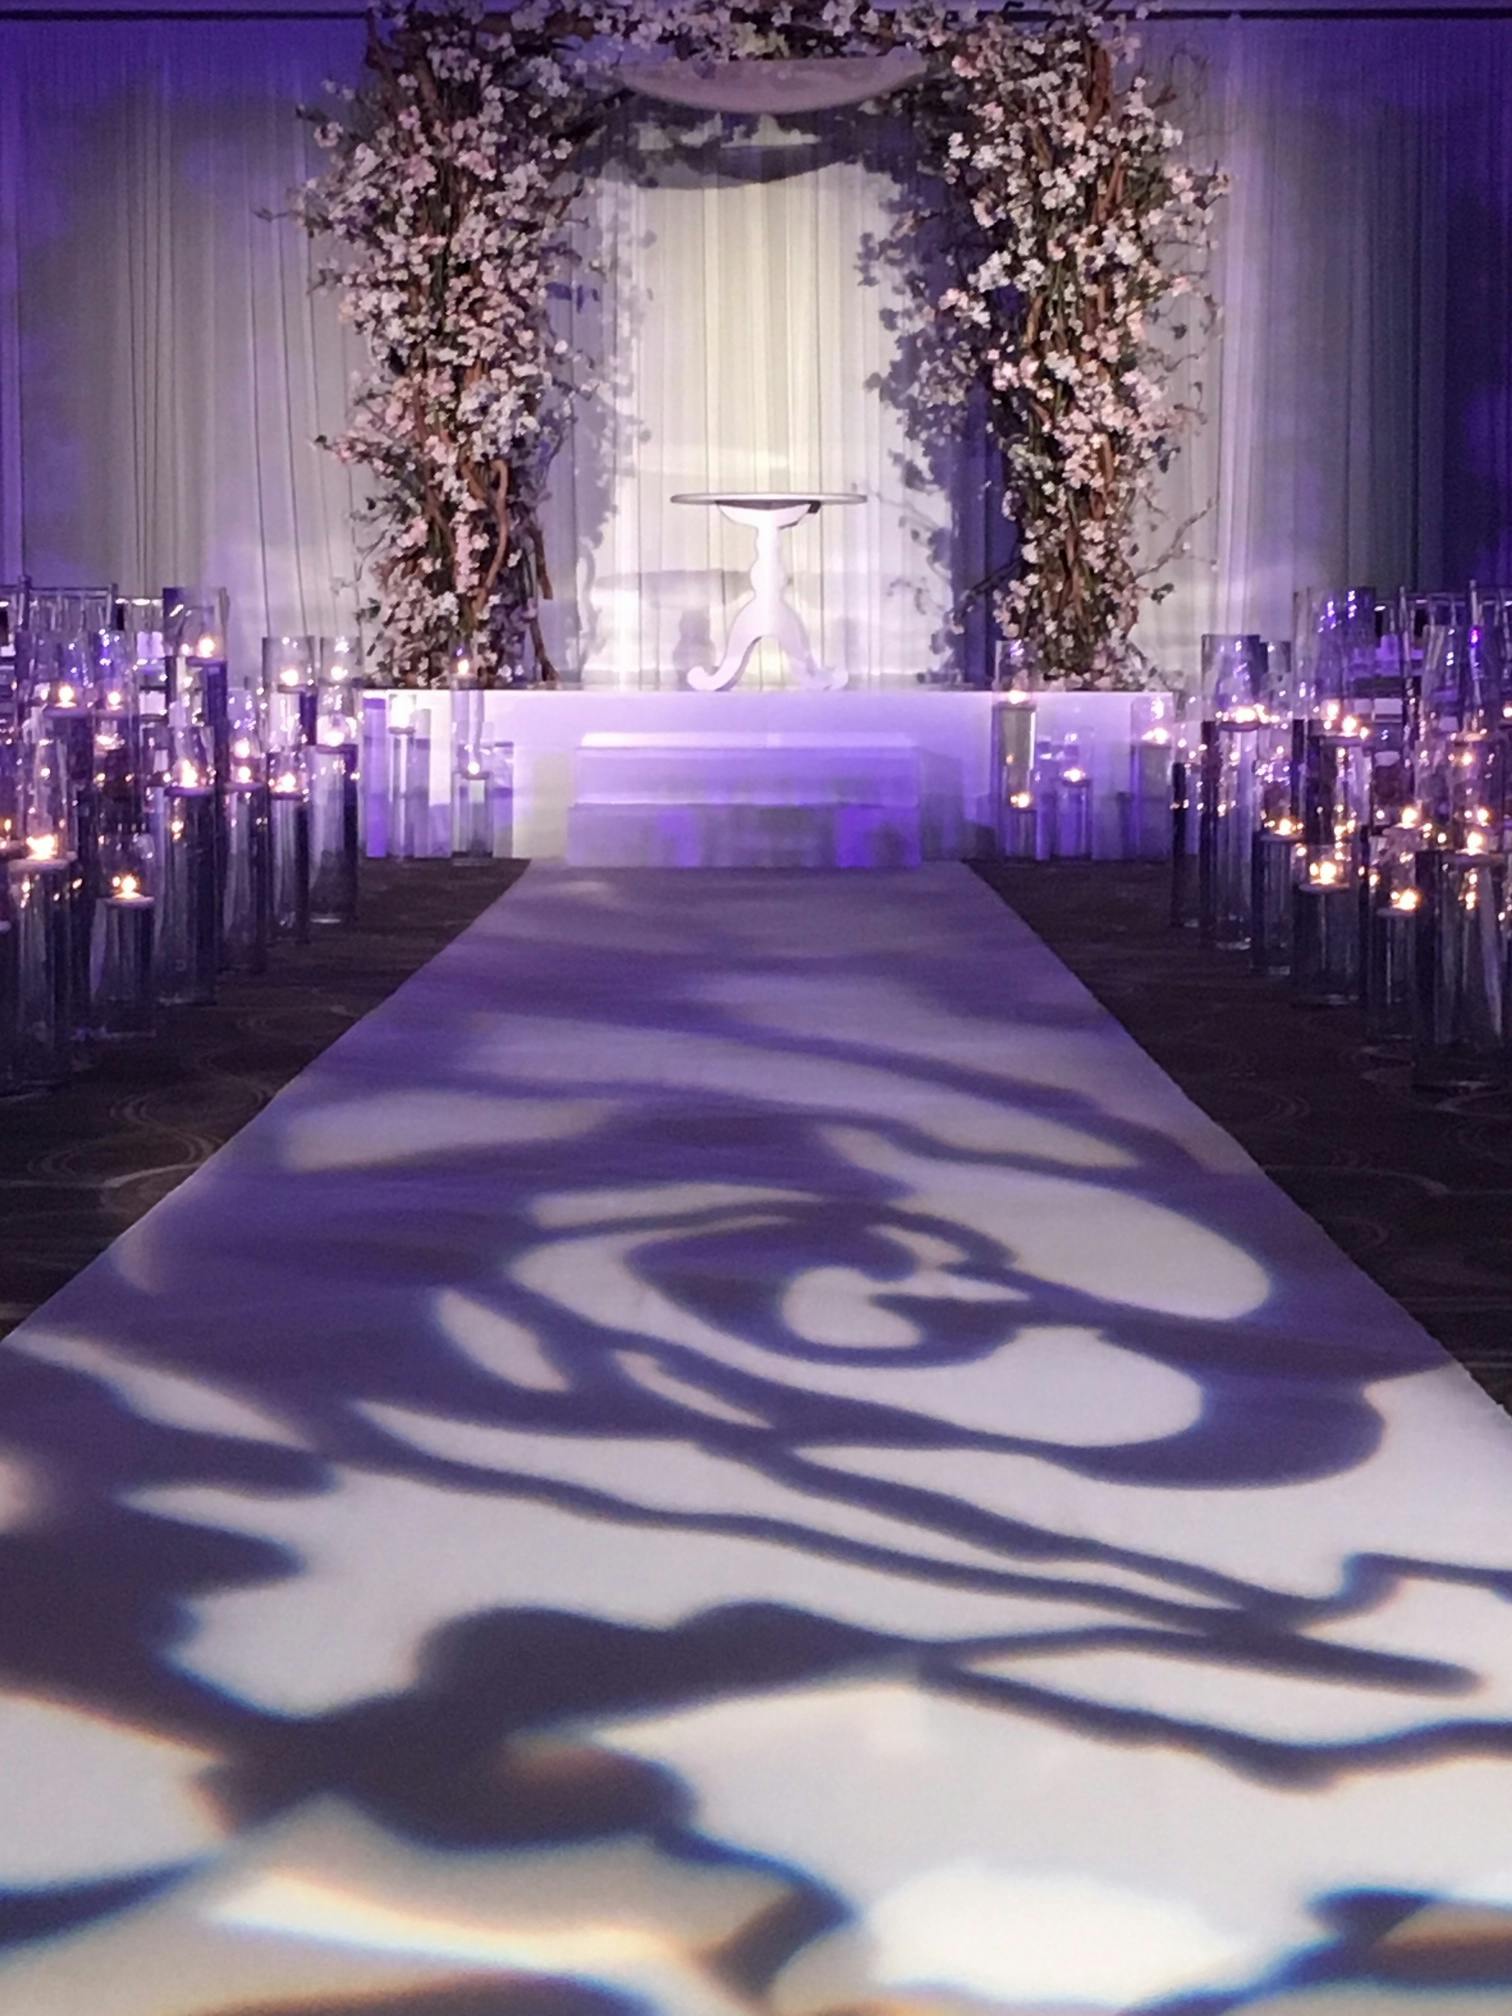 Glamorous & Stylish Wedding Turnberry Isle in Miami, FL With Creative Lighting Wedding Aisle Décor